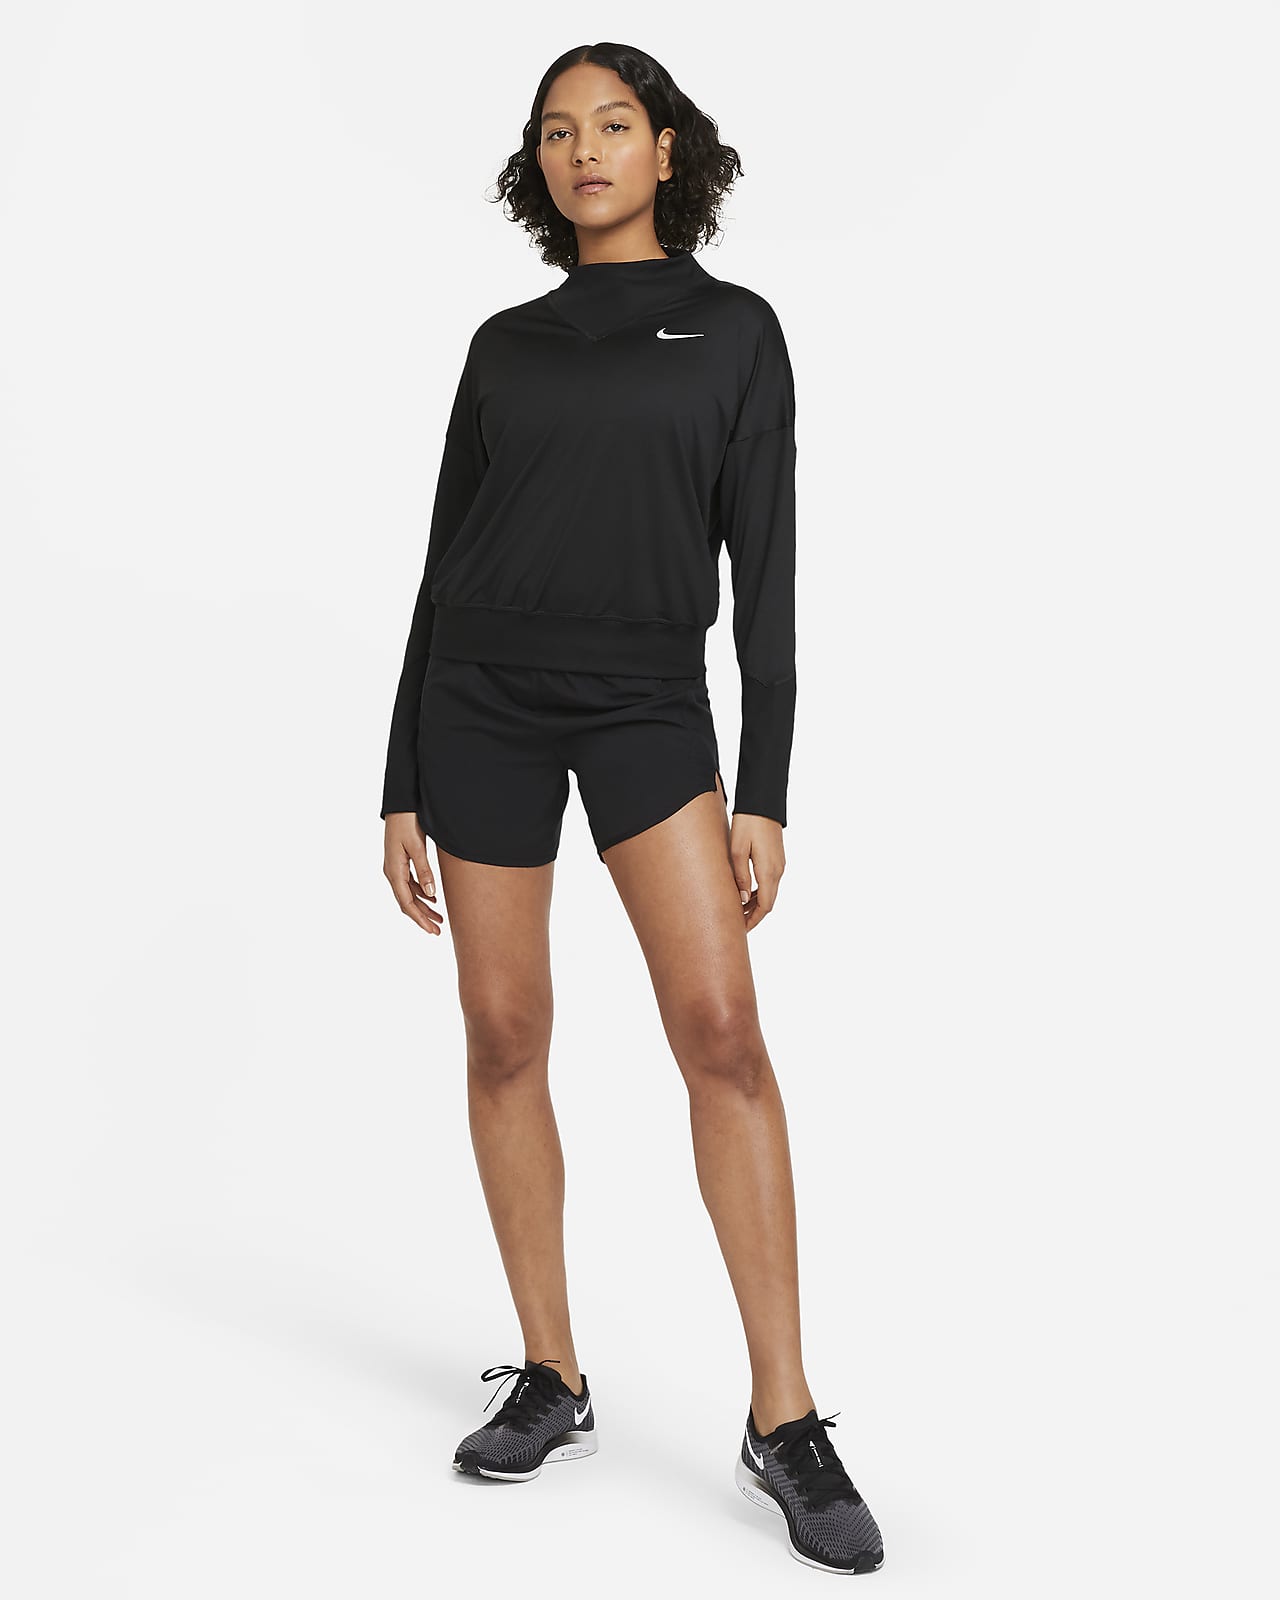 Women's Nike Dri-FIT Tempo Shorts  Running shorts women, Nike shorts women,  Running shorts